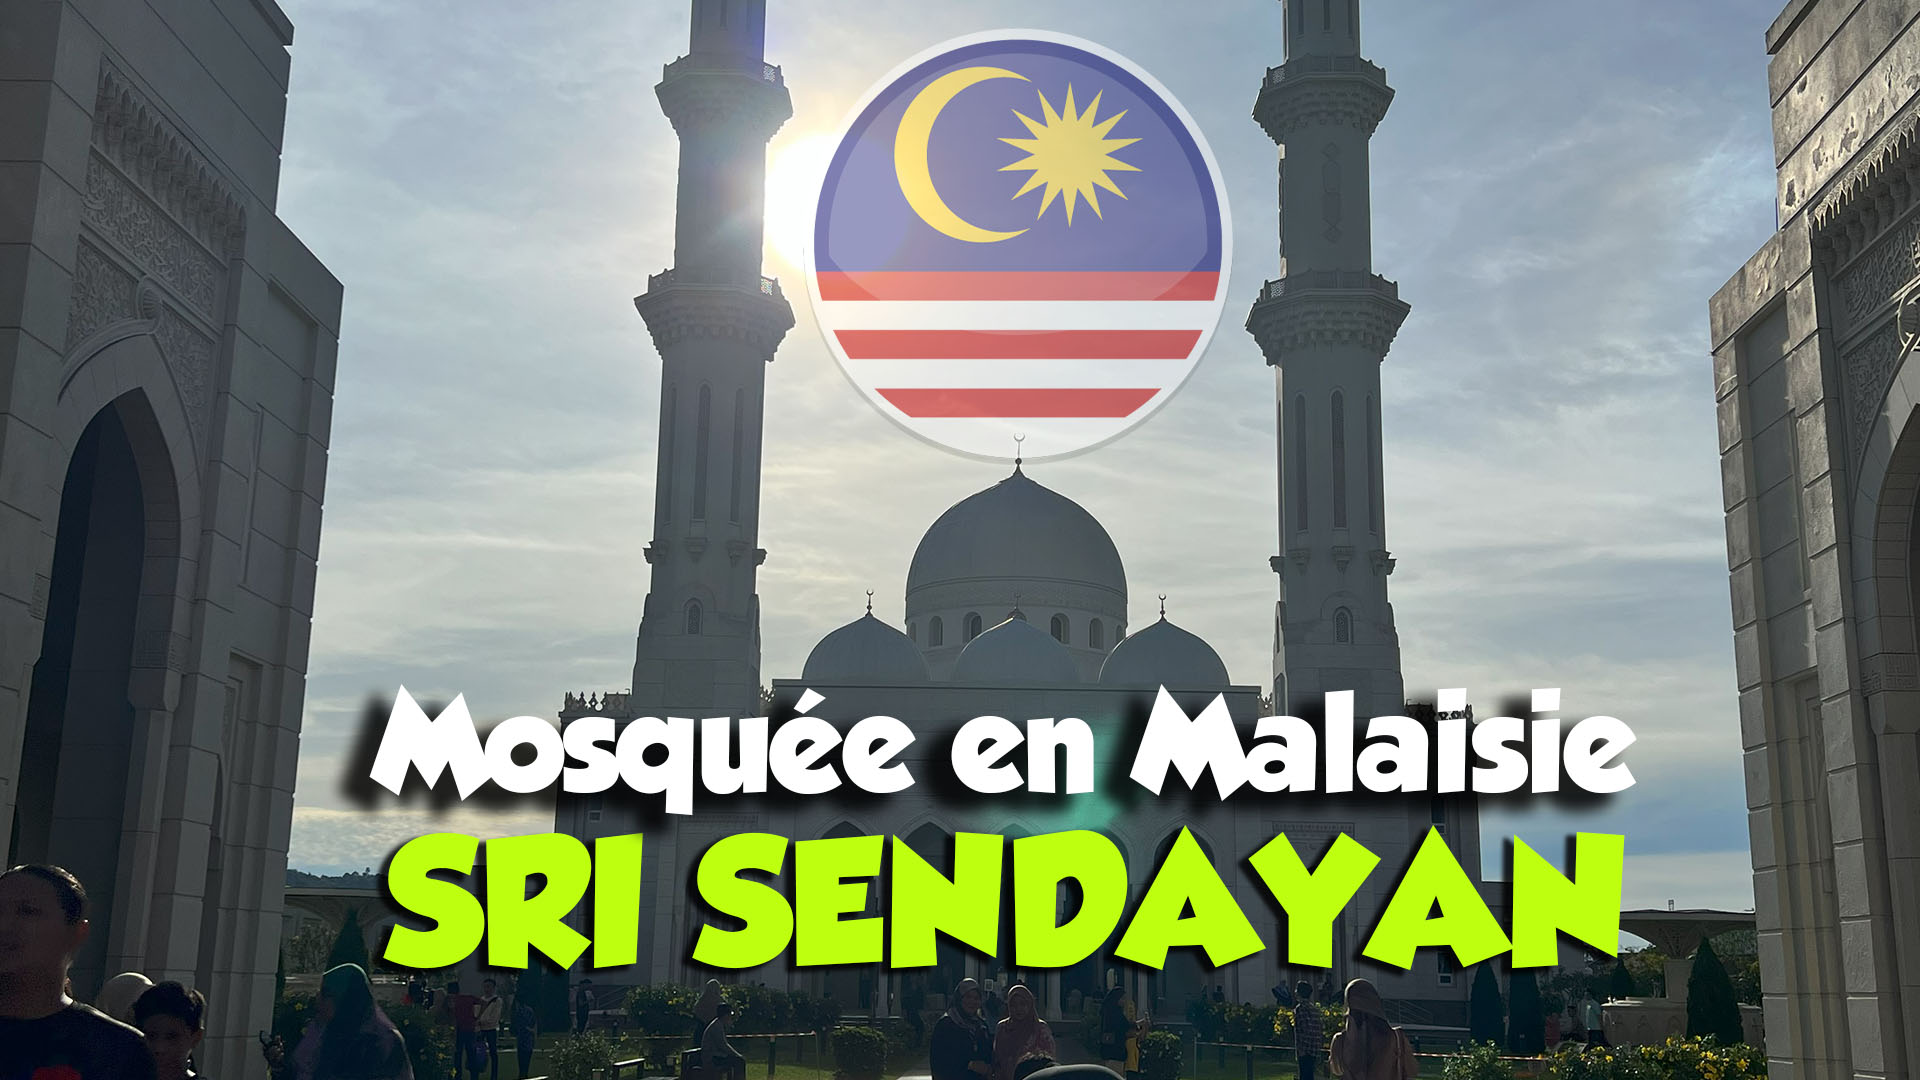 Mosquée en Malaisie Sri Sendayan